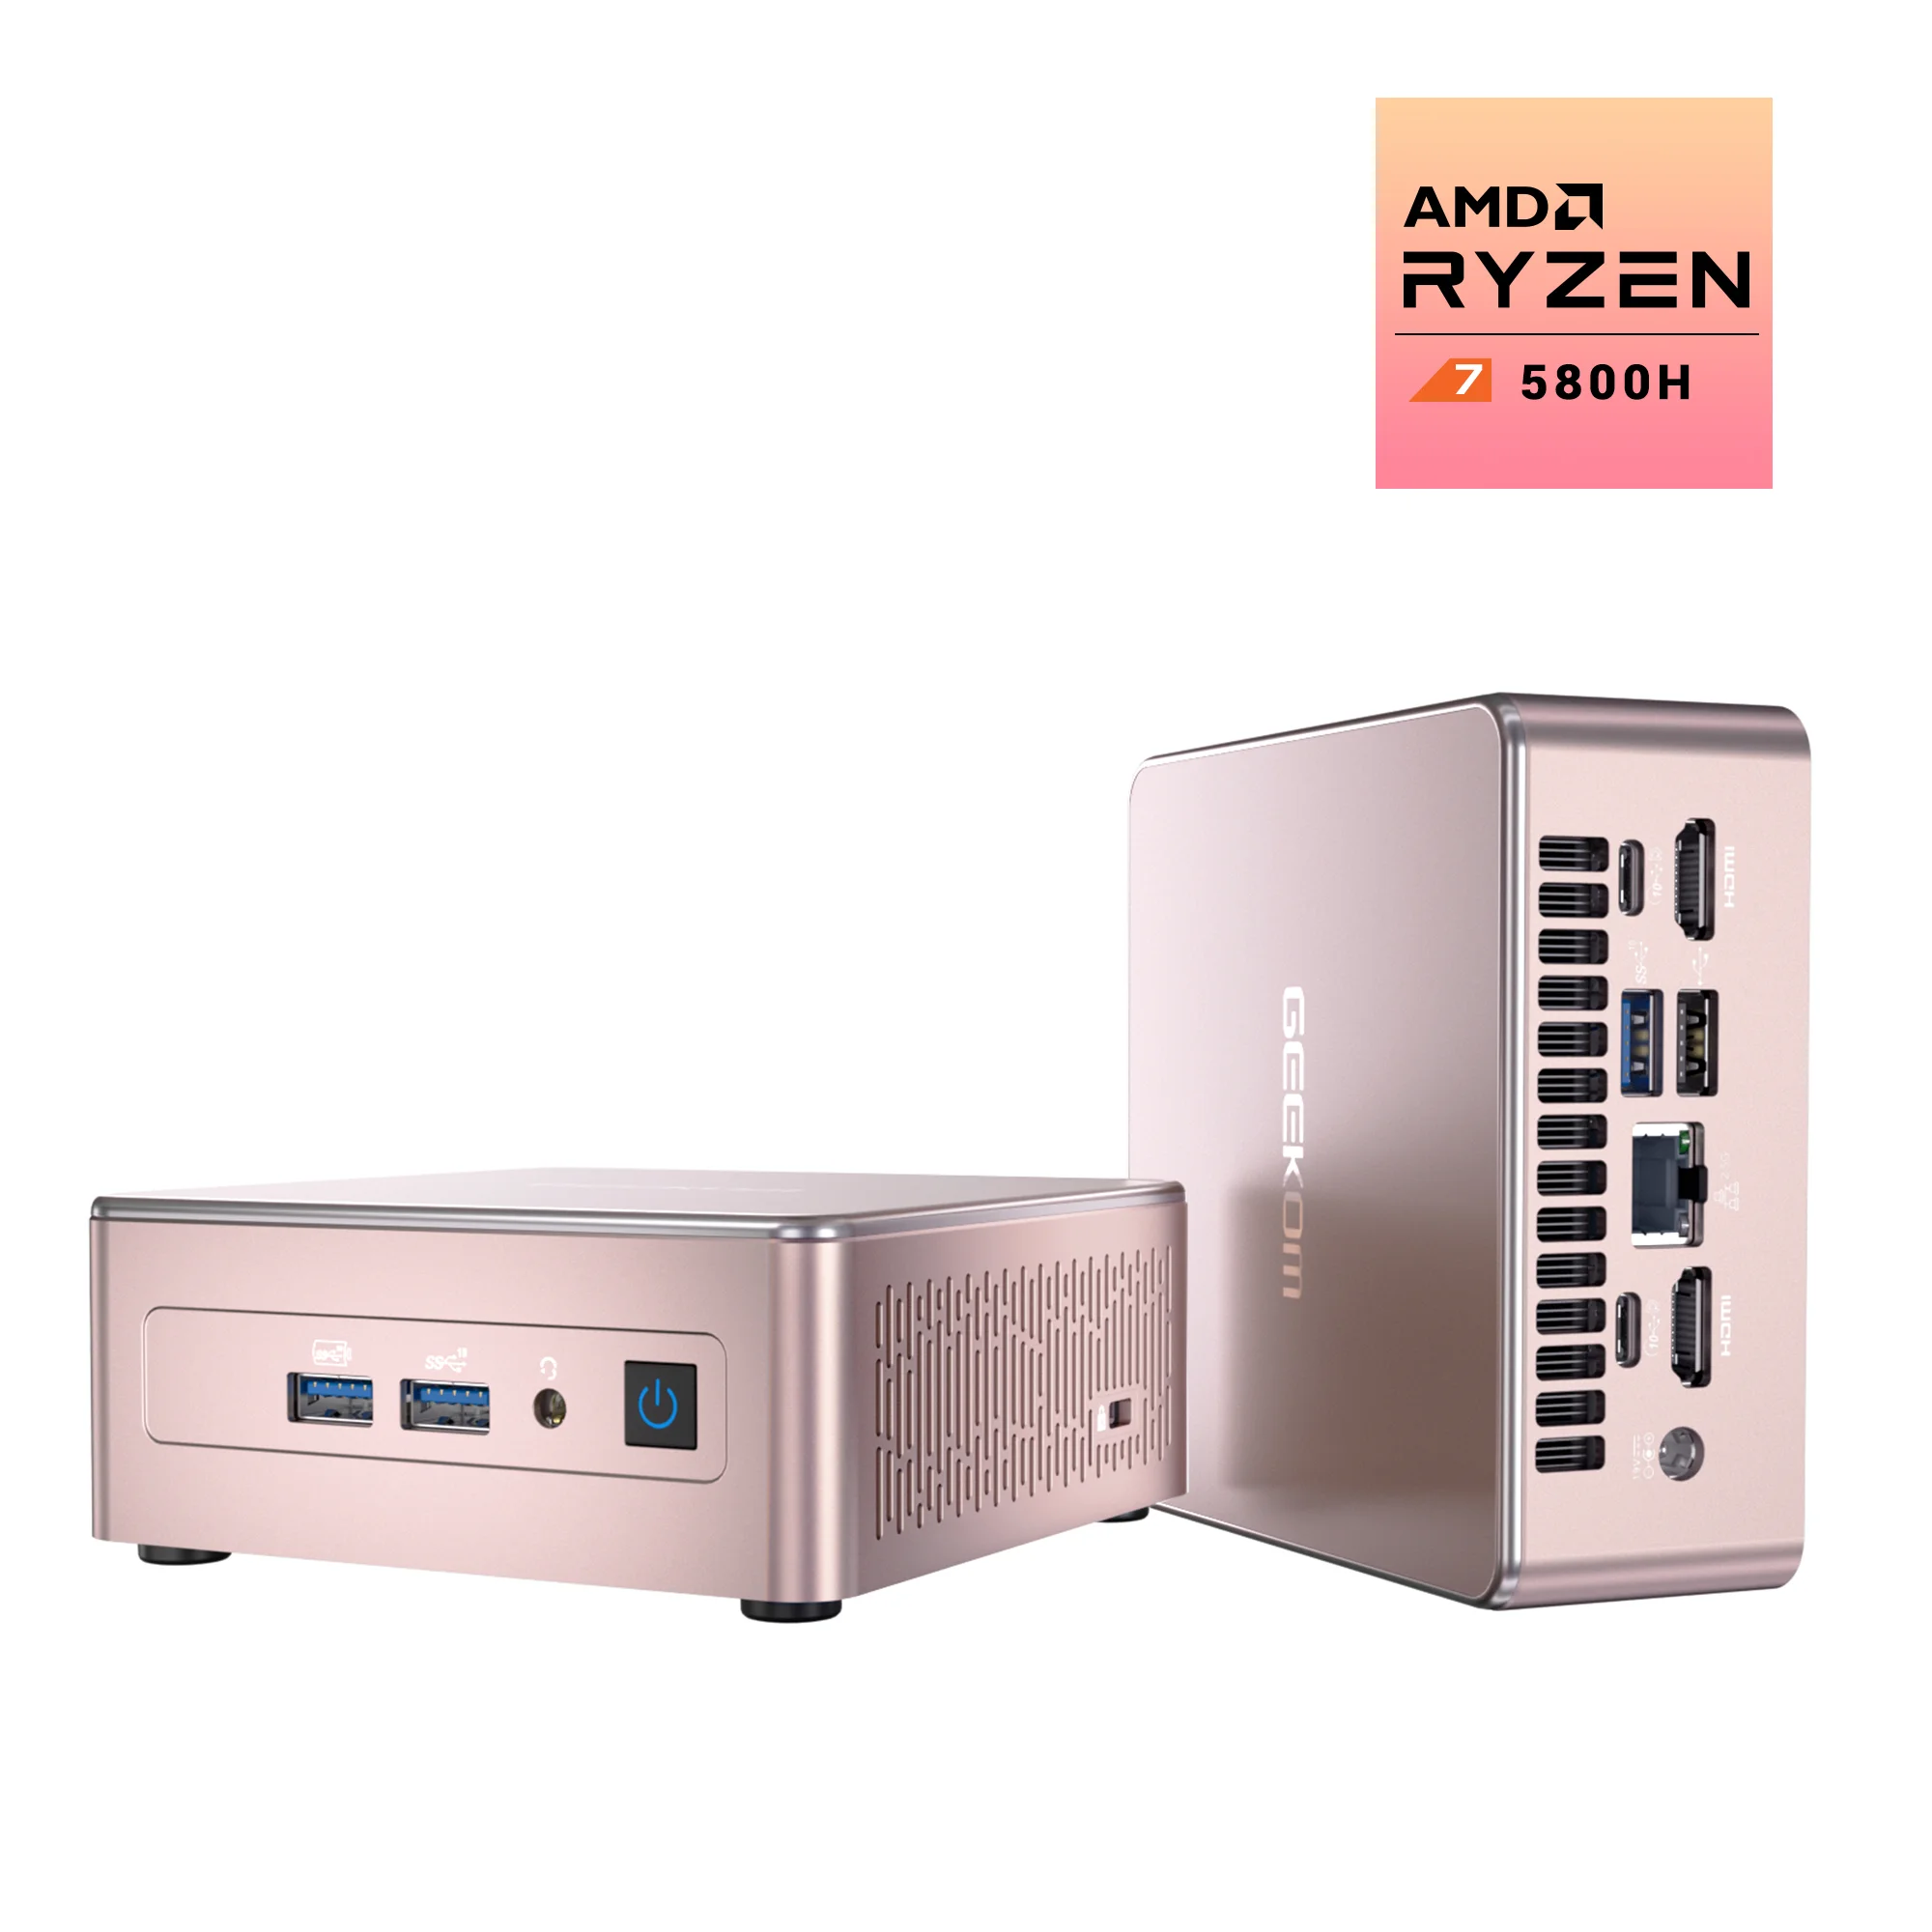 GEEKOM A5 Mini PC AMD Ryzen 7 5800H